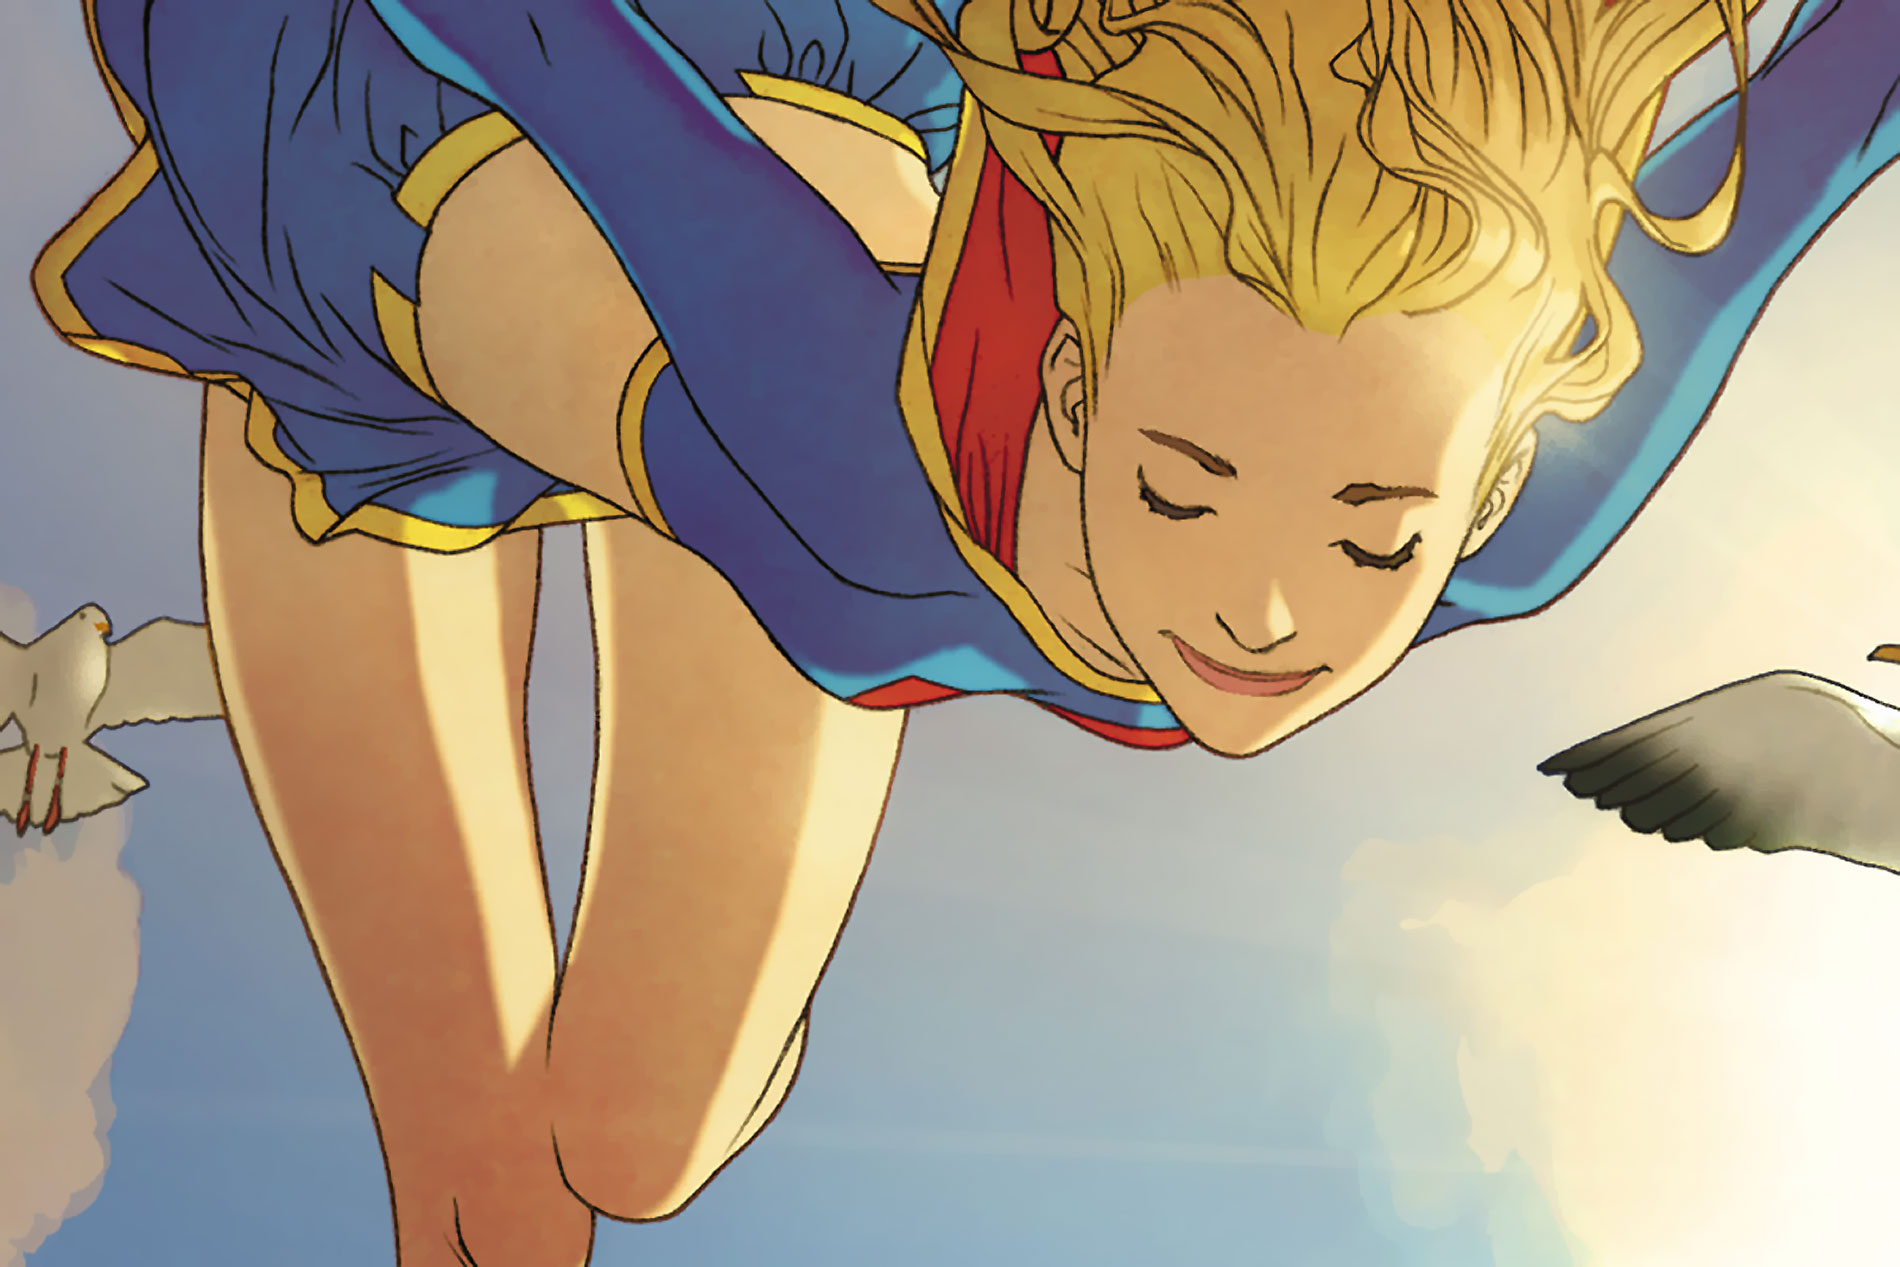 Descarga gratuita de fondo de pantalla para móvil de Supergirl, Superhombre, Historietas.